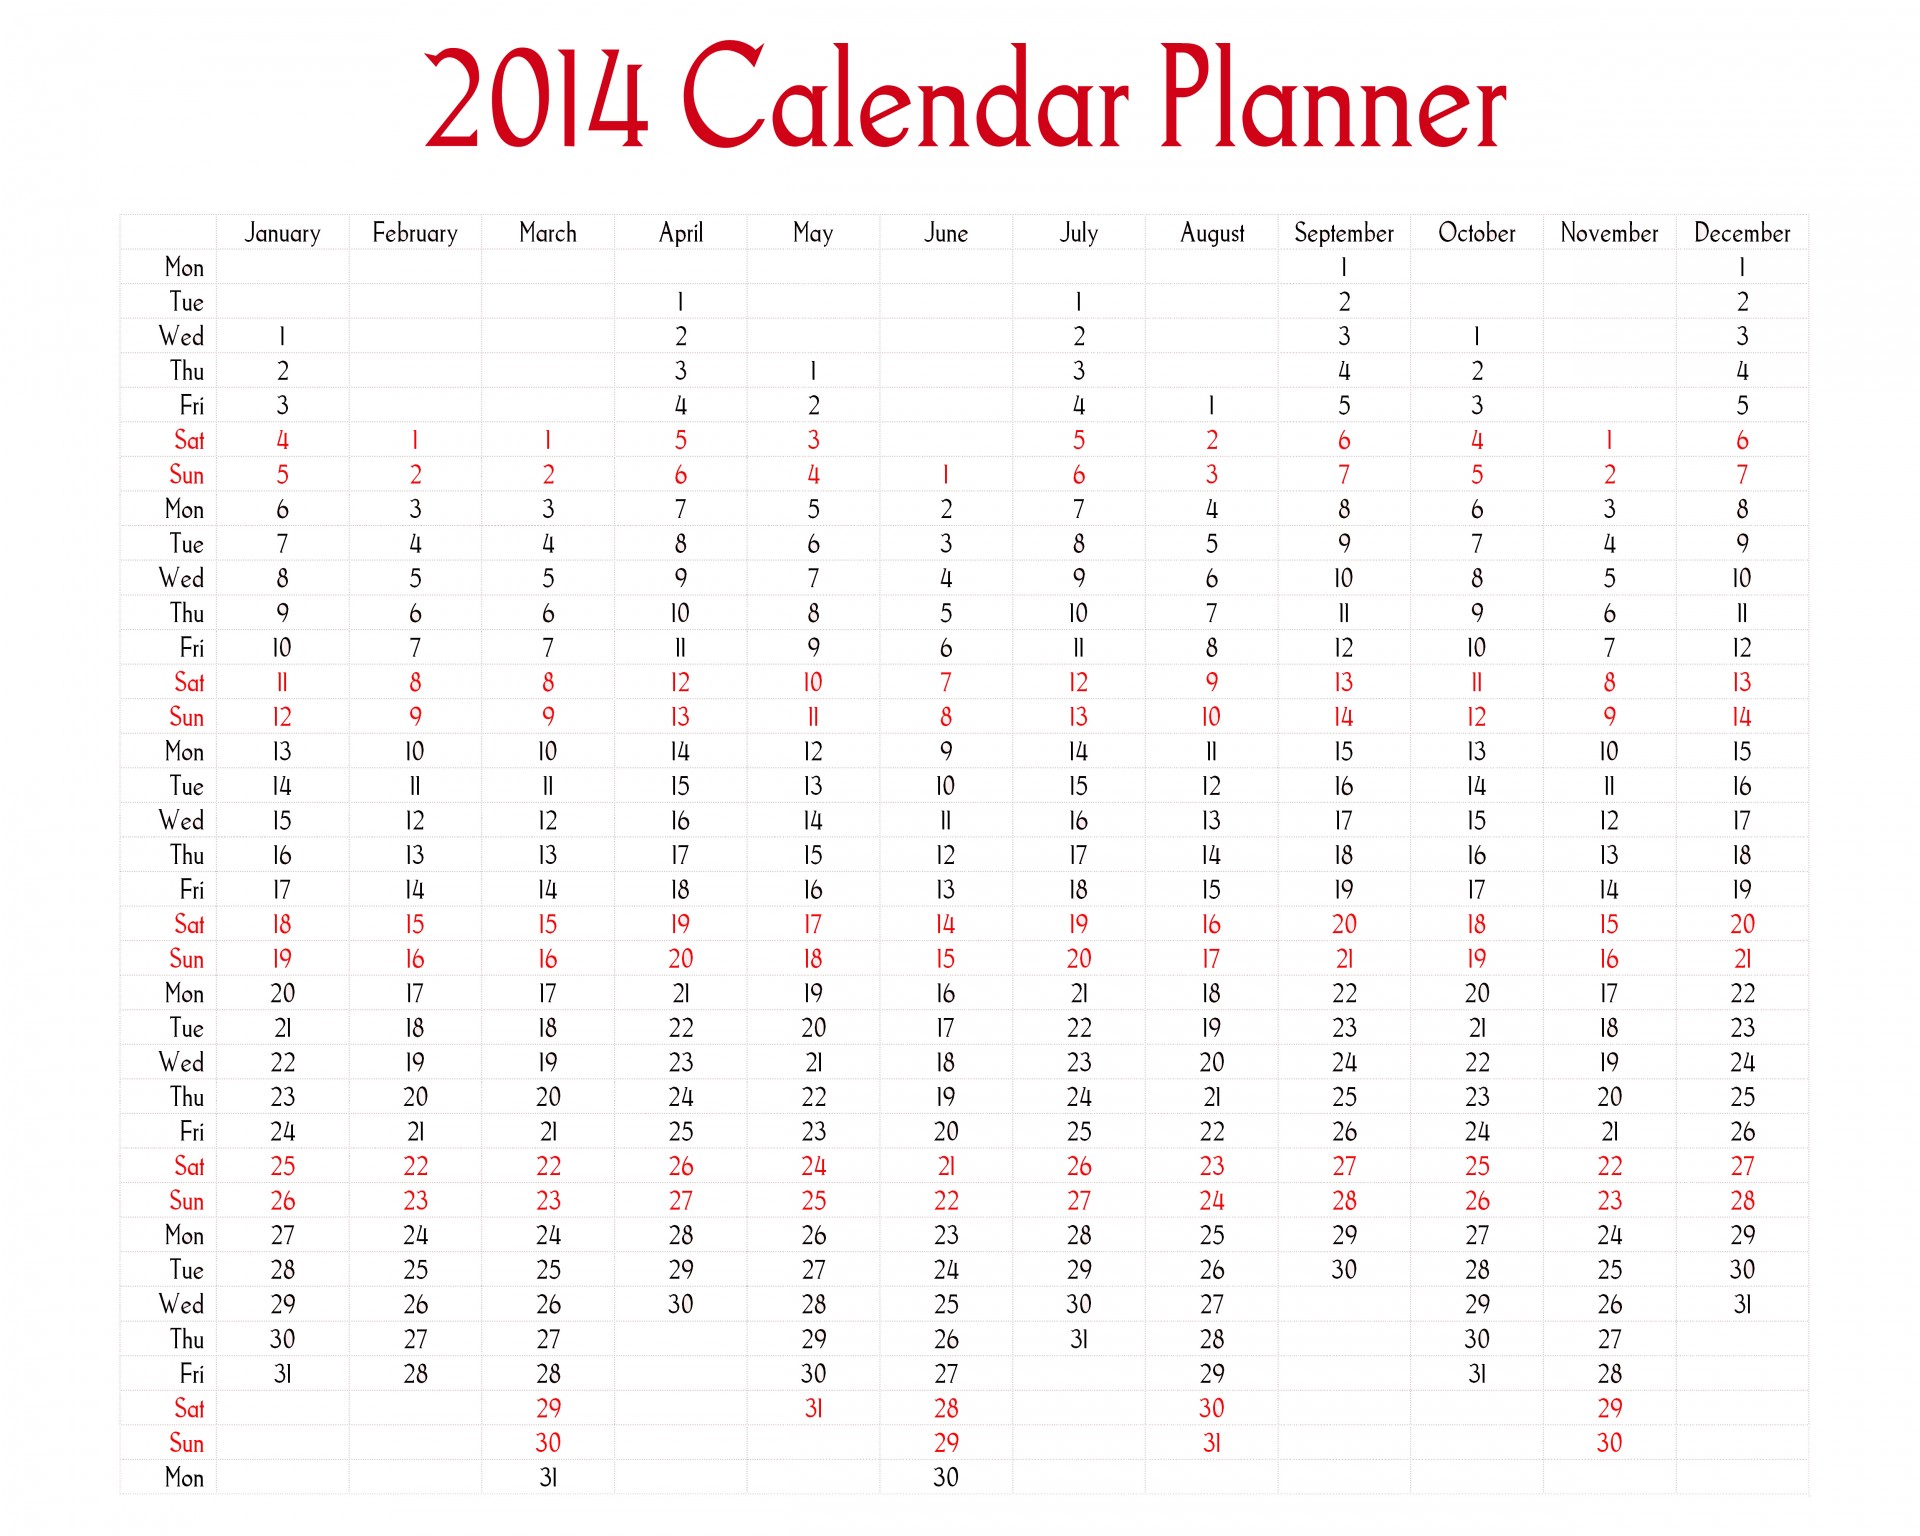 2014 Calendar Planner